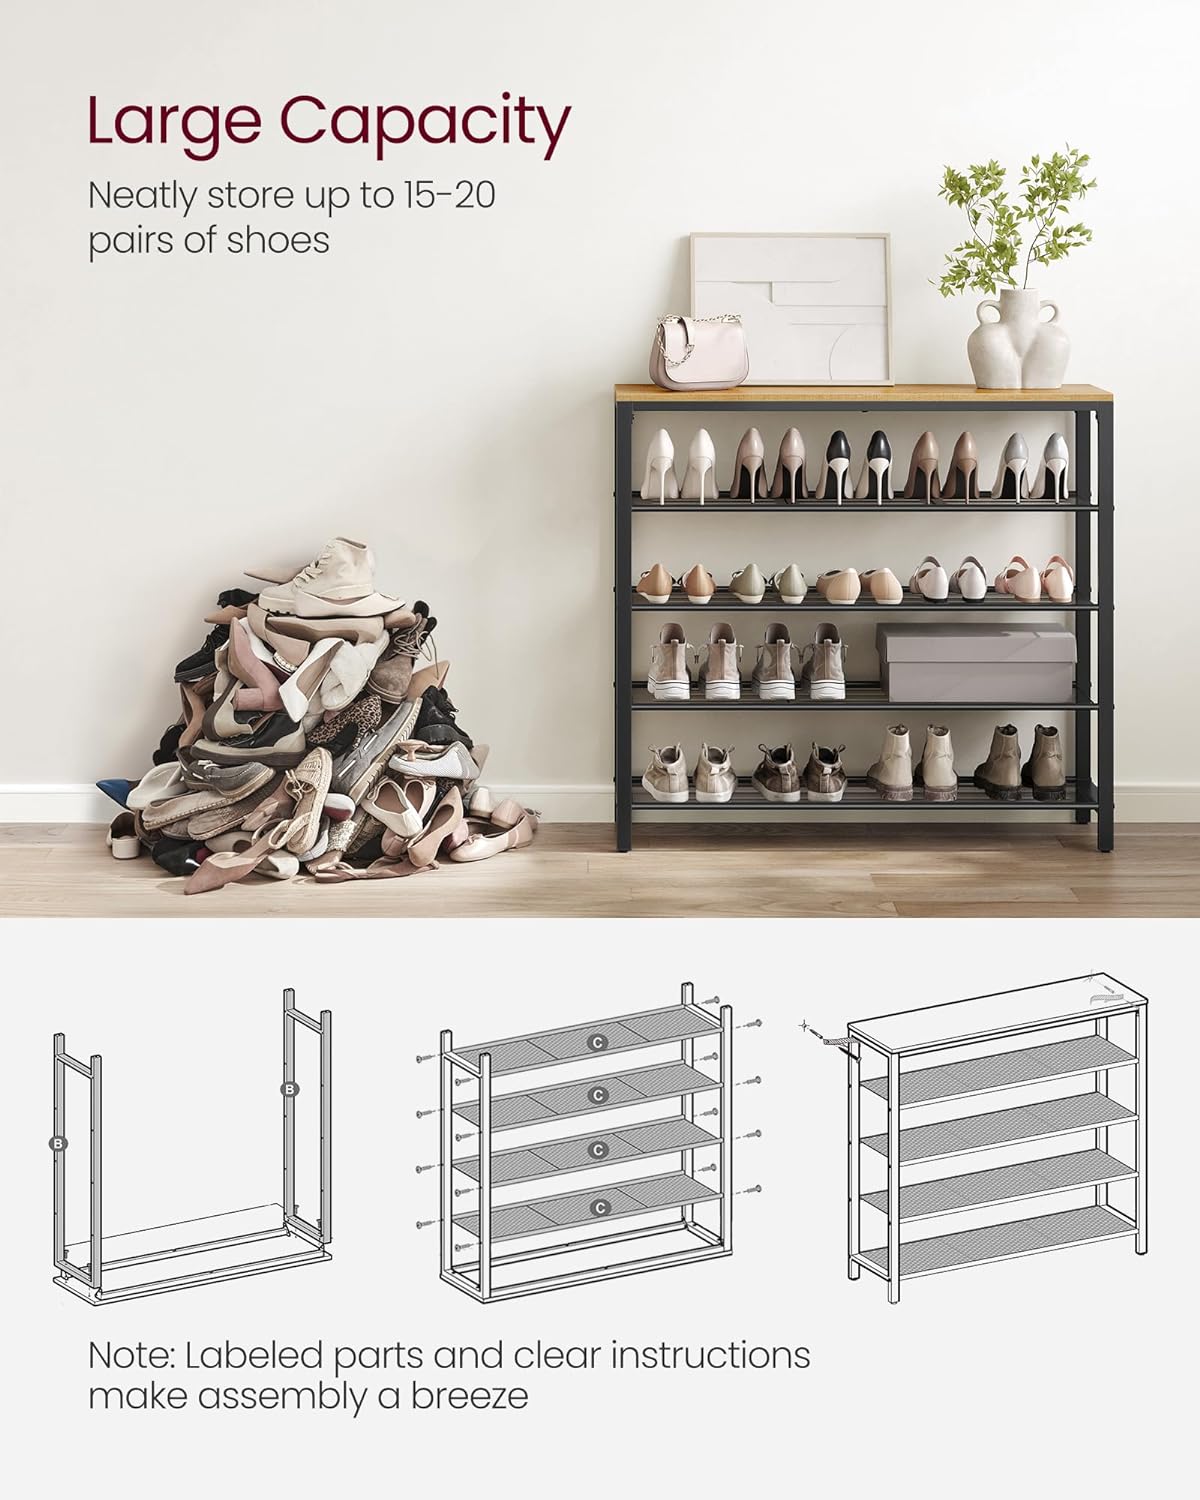 Metal 4 / 5 Shelf Shoe Rack Organizer - Large 4 / 5 Shelves Tiers